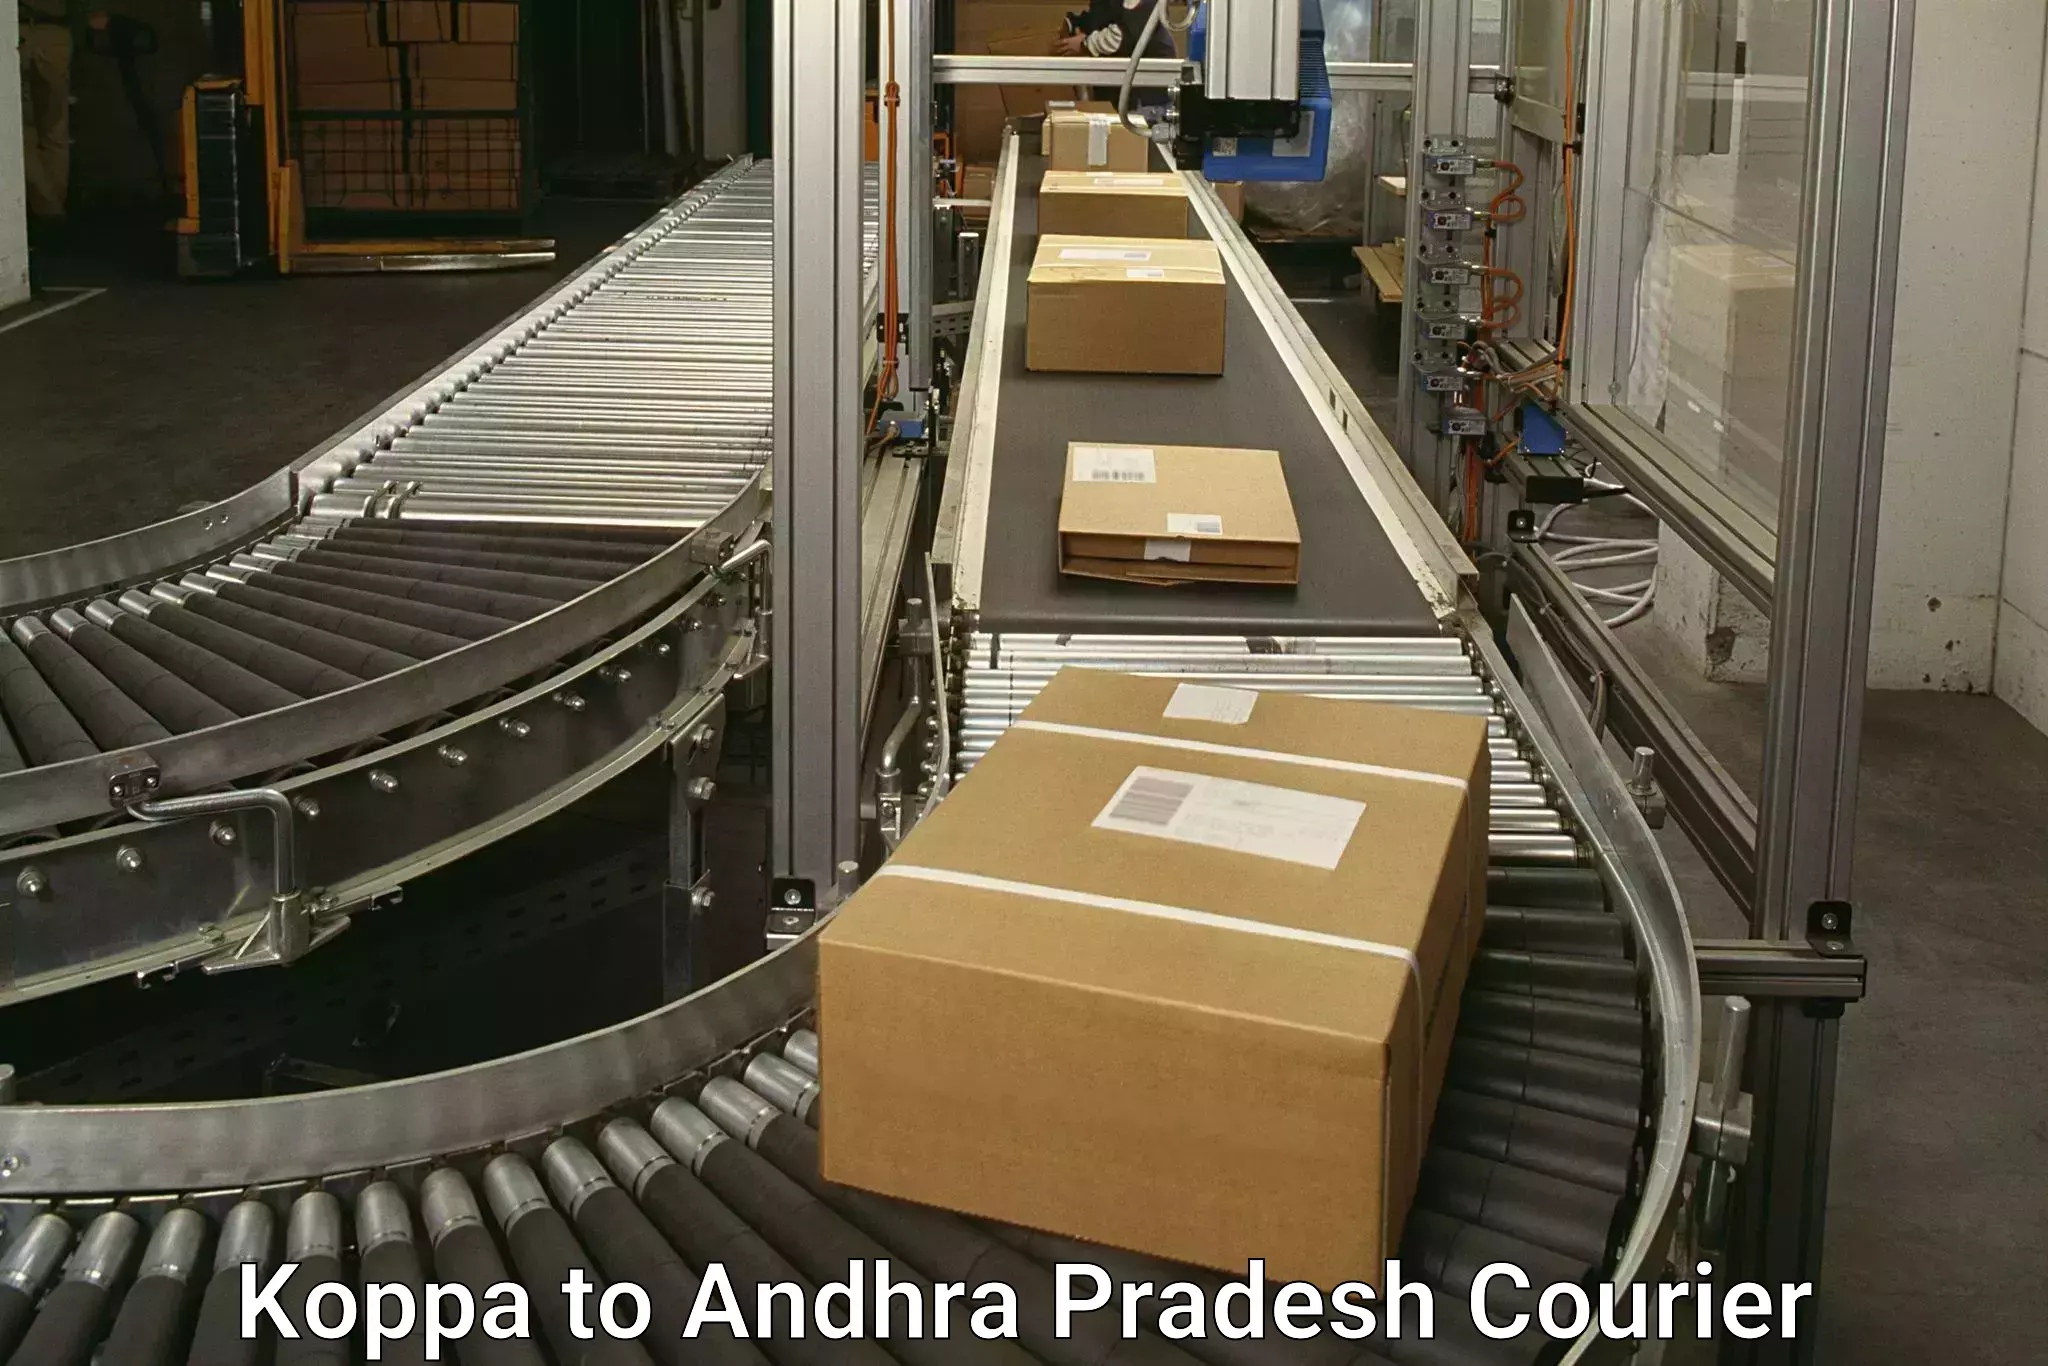 Courier service efficiency Koppa to Tripuranthakam